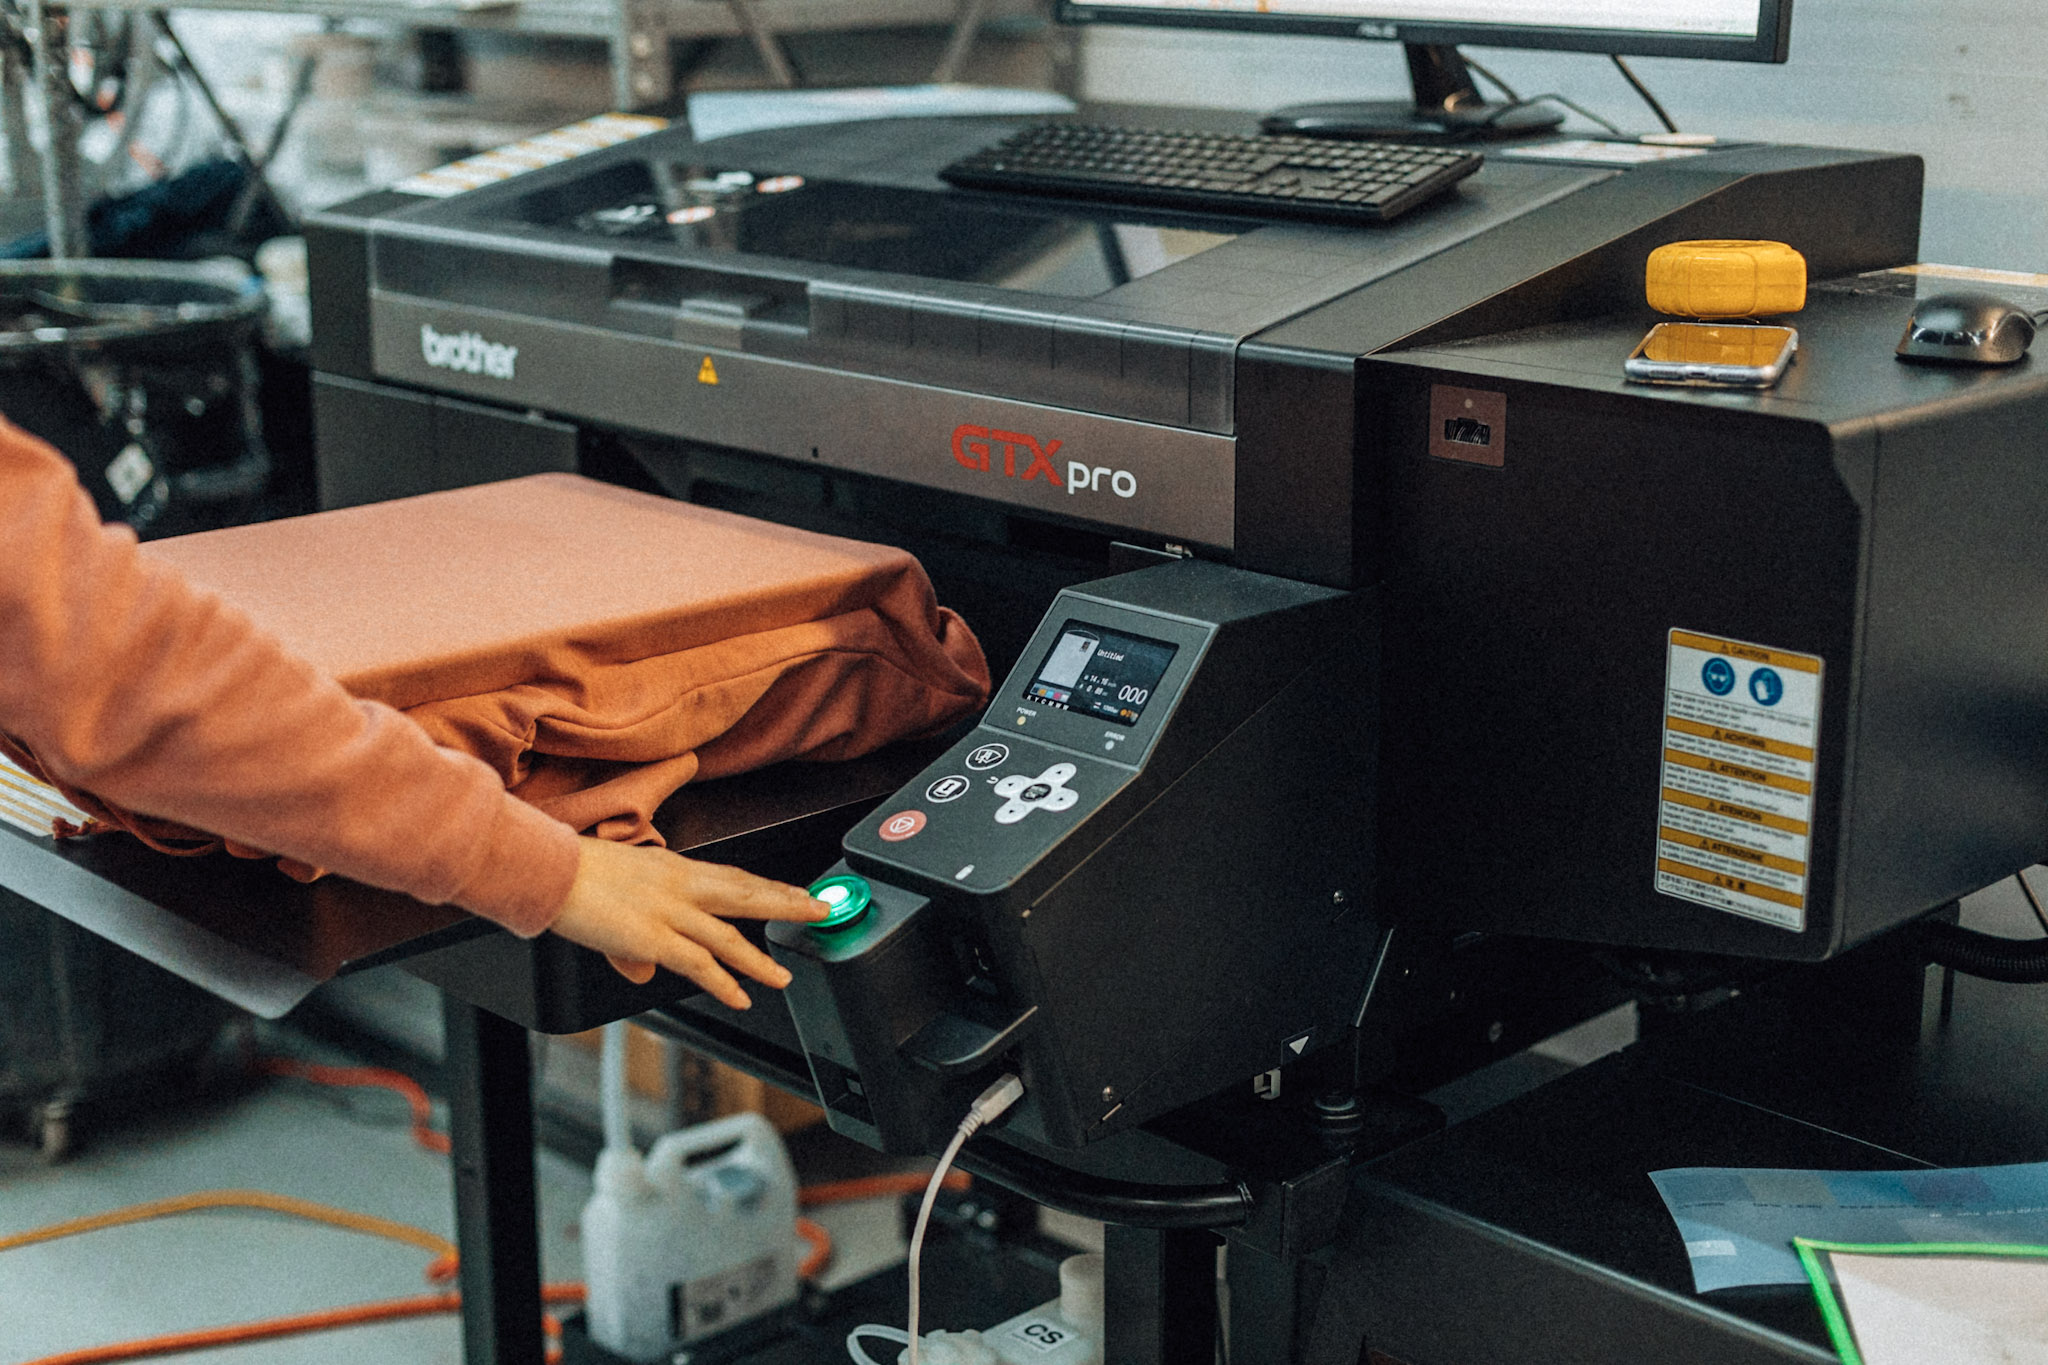 GTXpro Bulk, Industrial Garment Printer